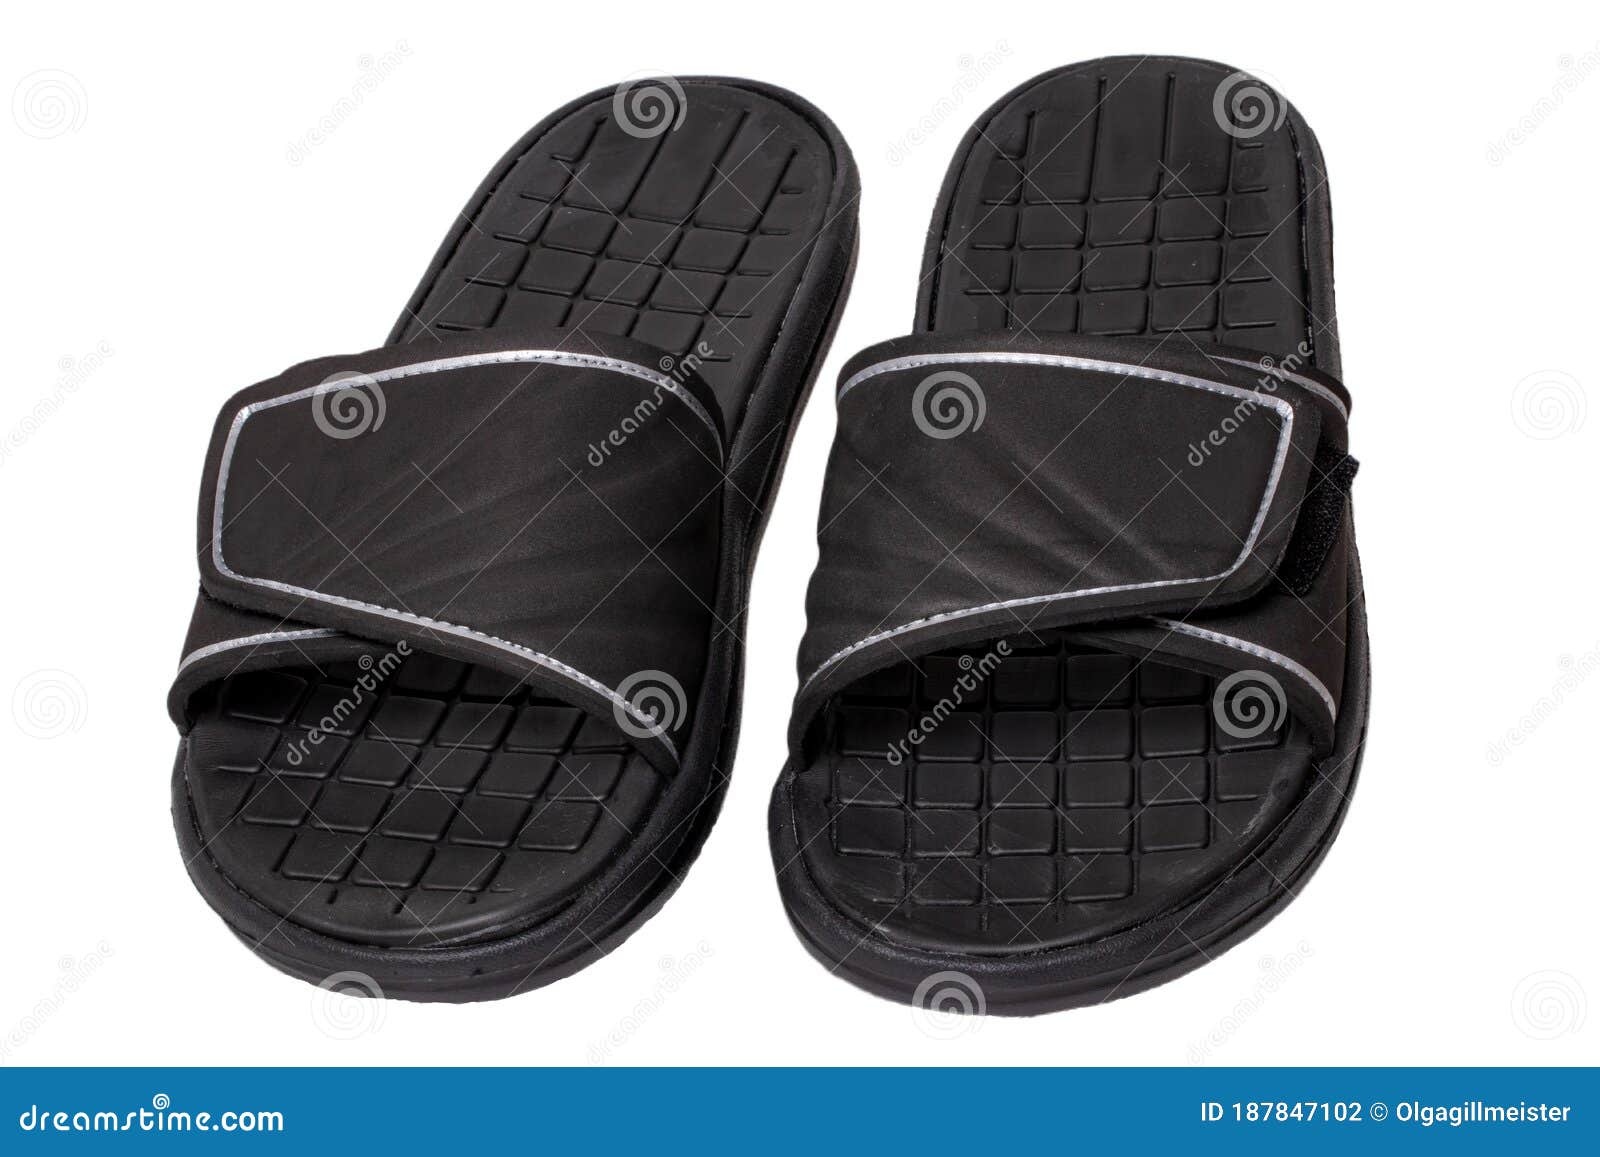 Buy eeco easy Stylish & Comfort Slip-Resistant Slippers for Men Black at  Amazon.in